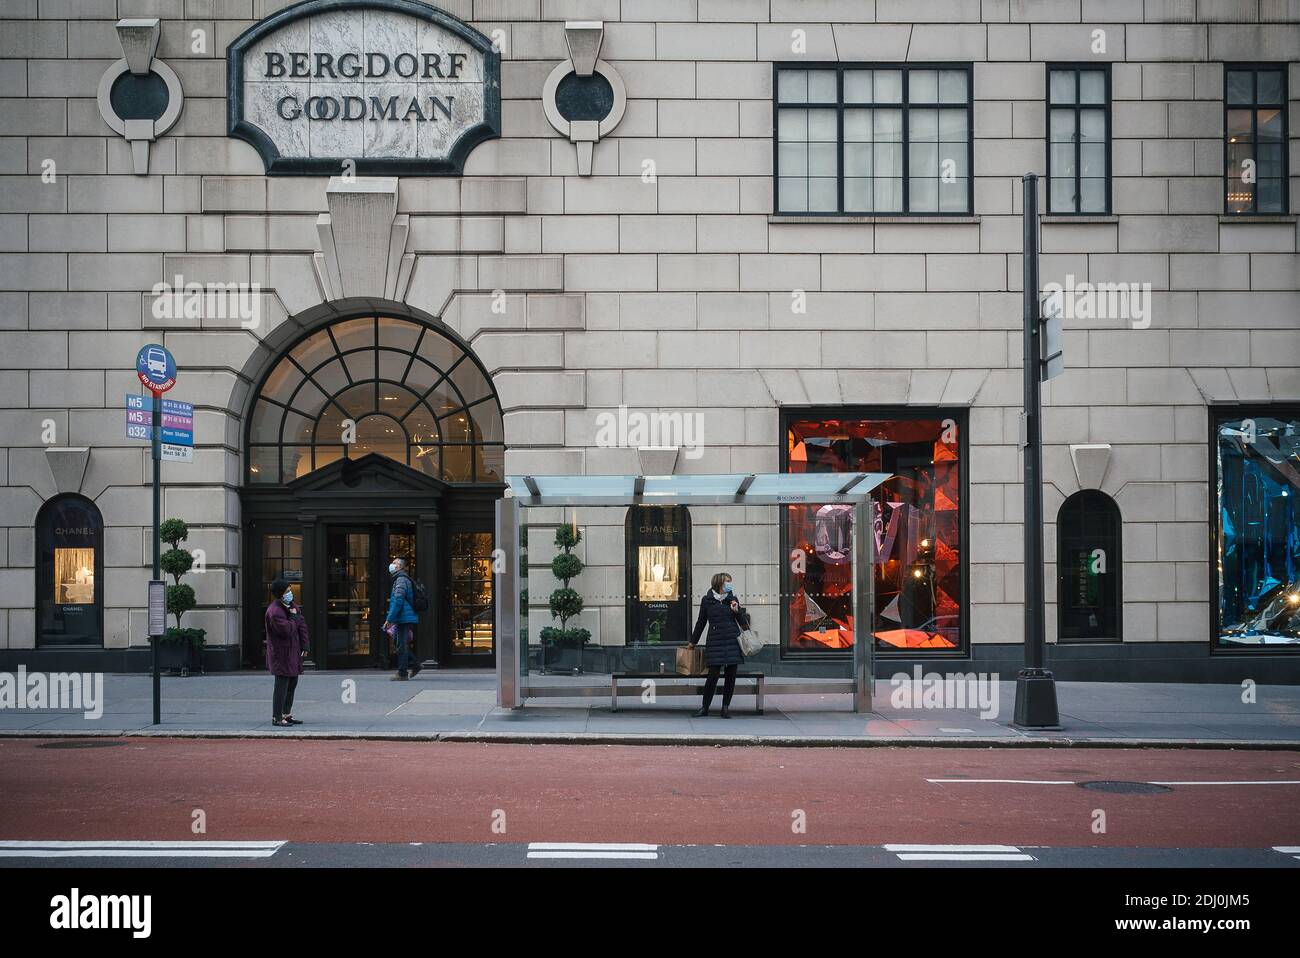 Bergdorf goodman hi-res stock photography and images - Alamy